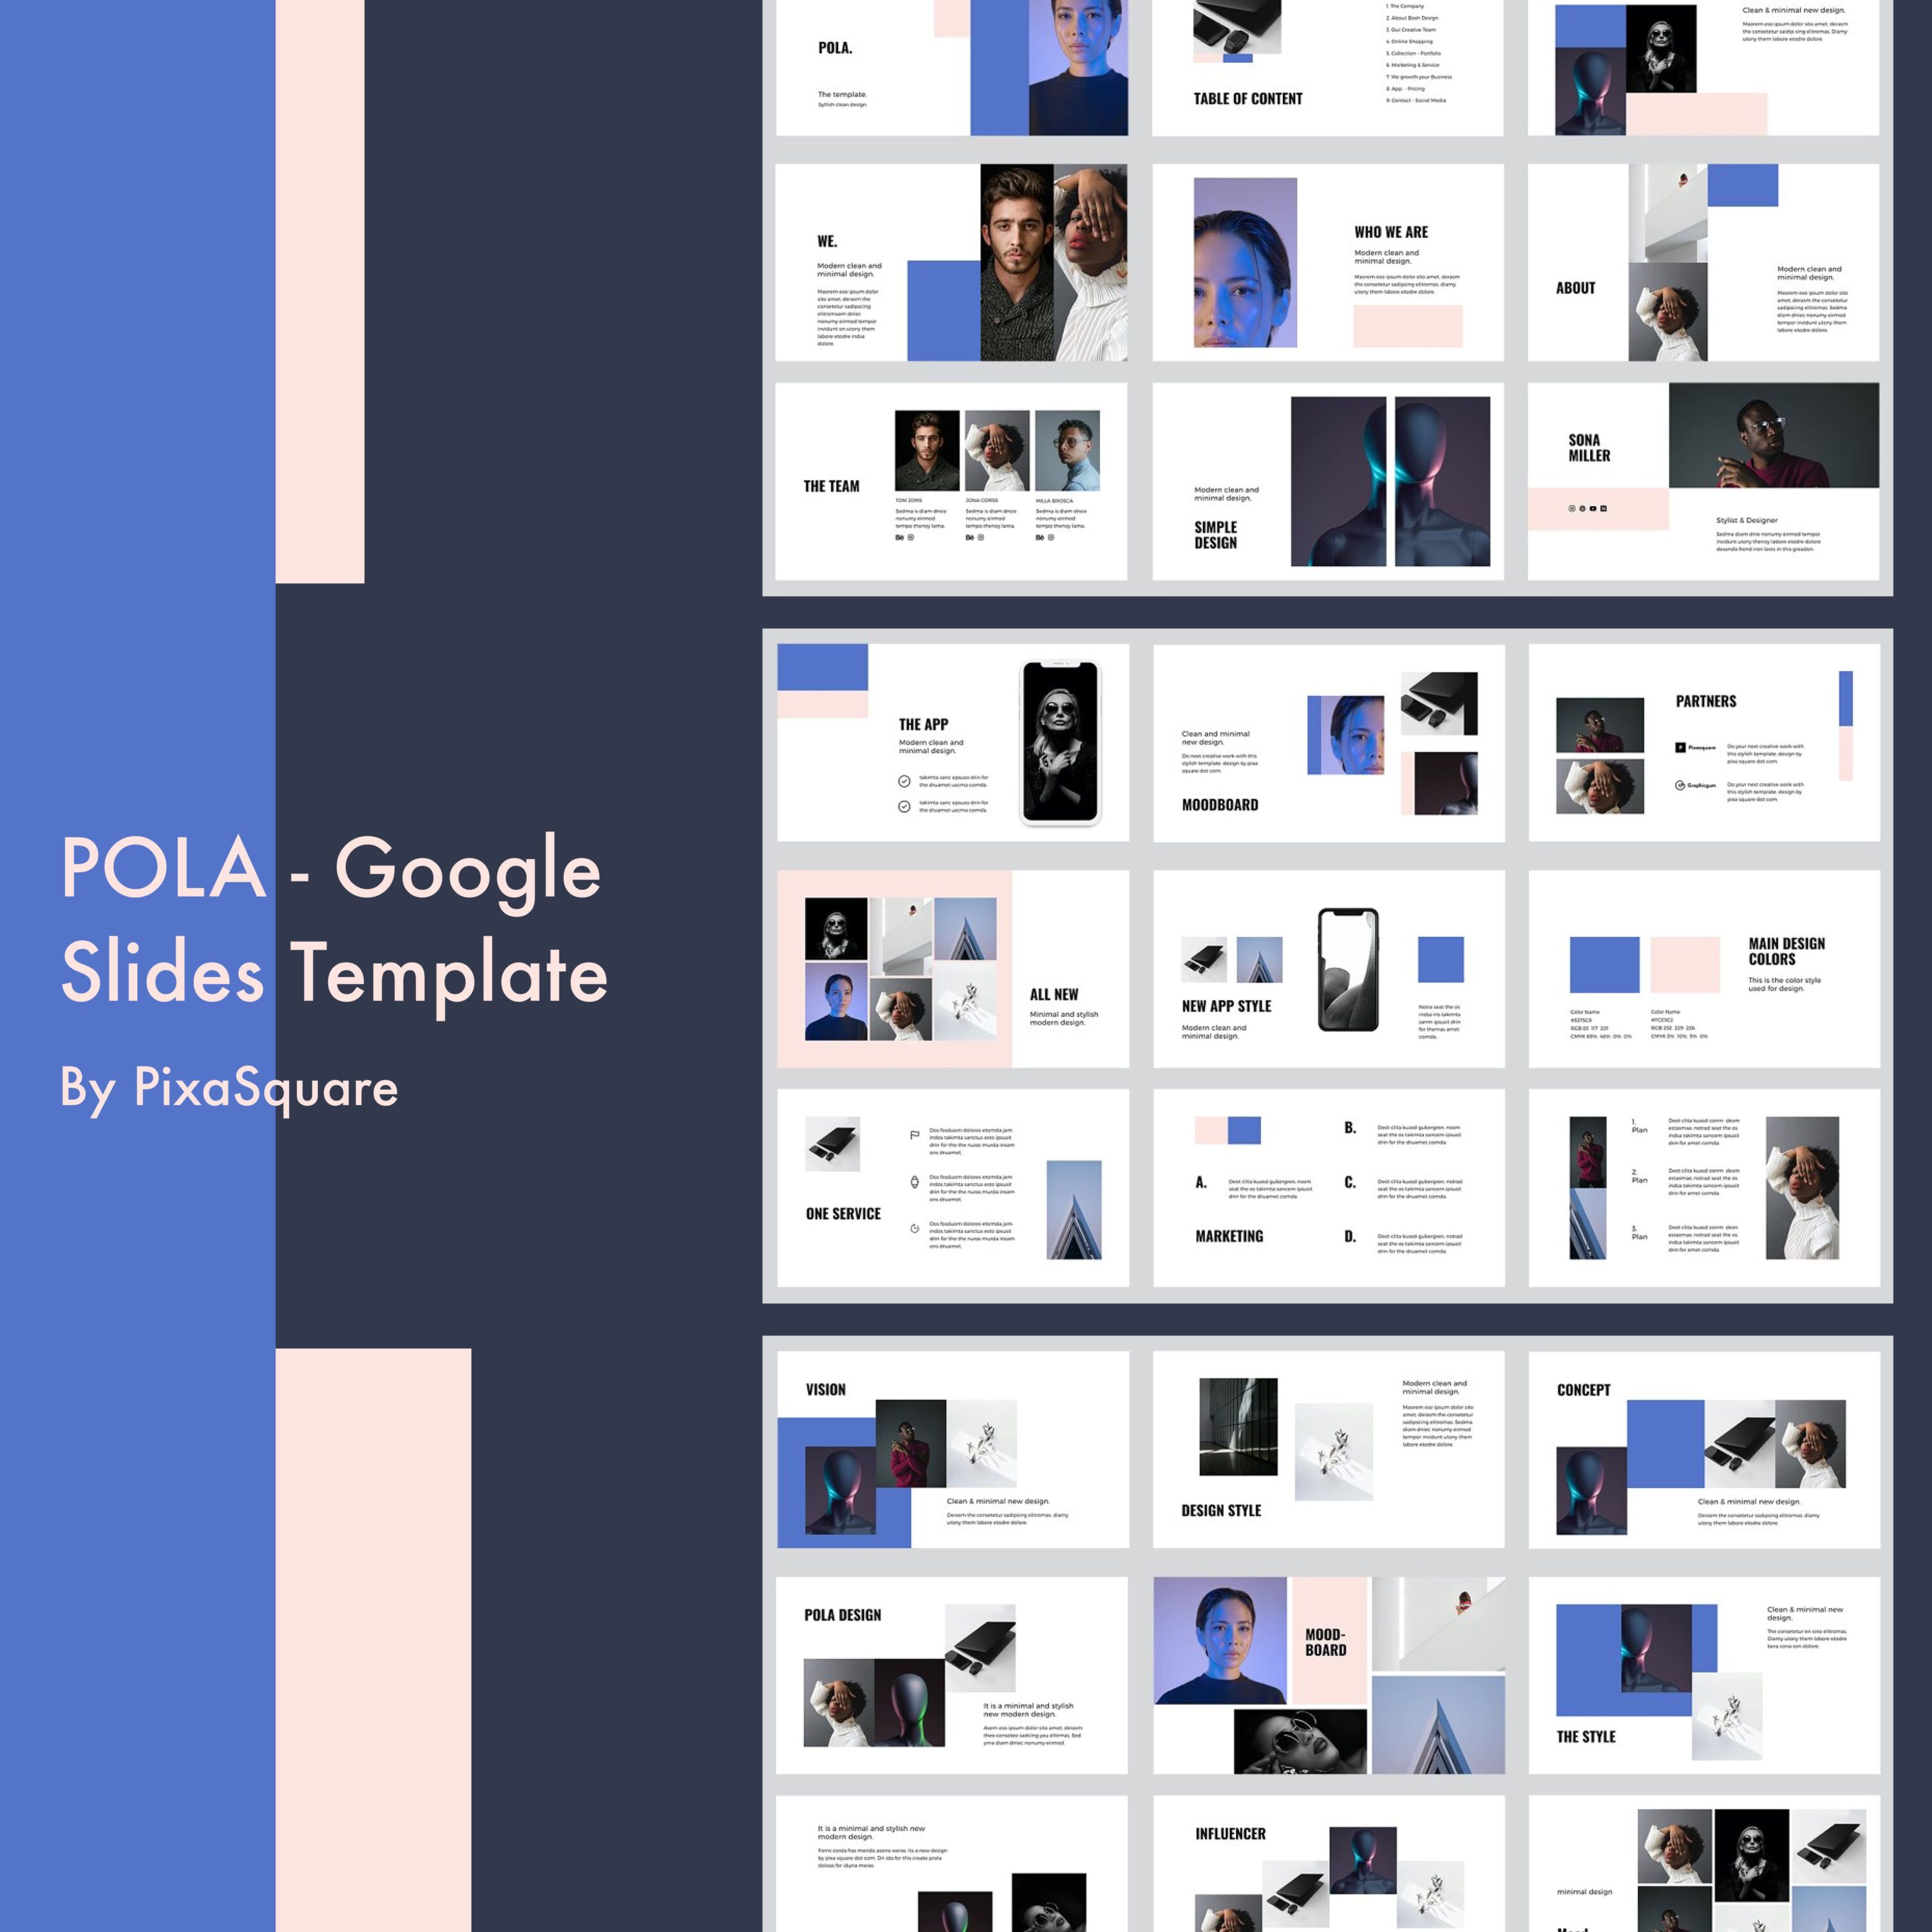 POLA - Google Slides Template cover.